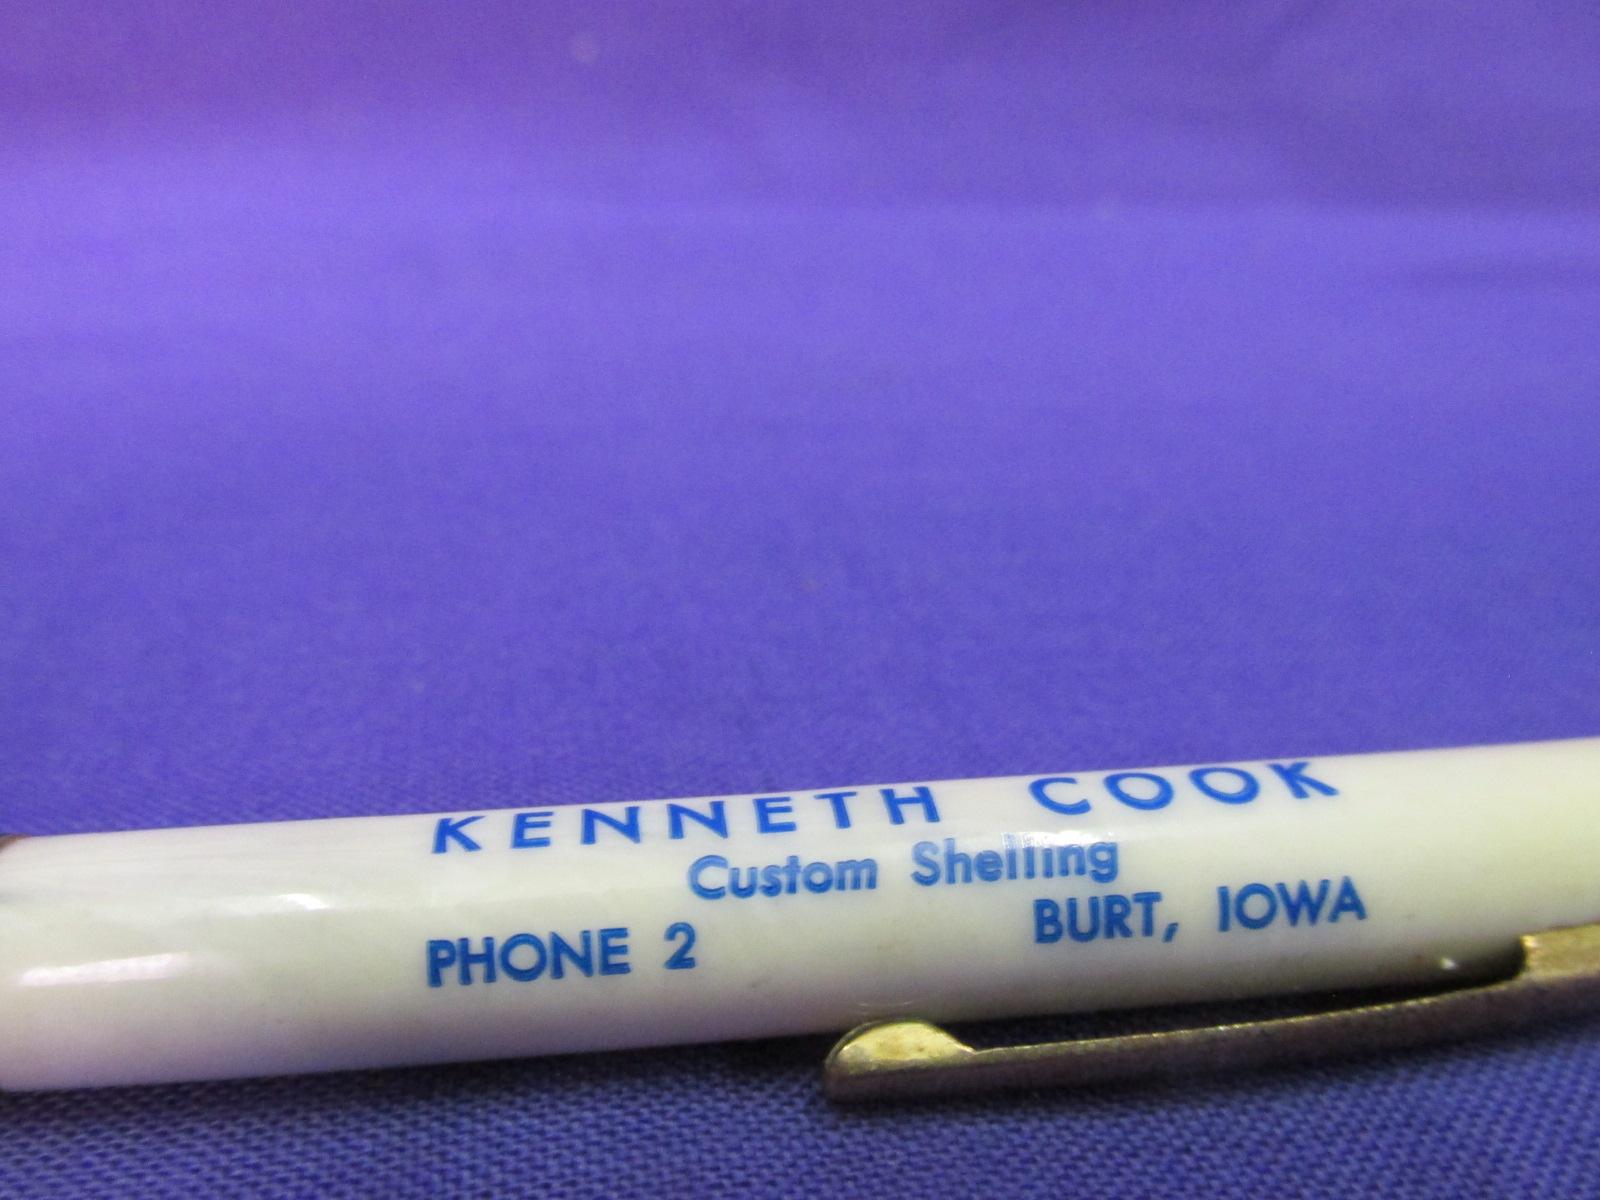 Appx 150 Vintage Mechanical Pencils w/ MN & Iowa Advvertising